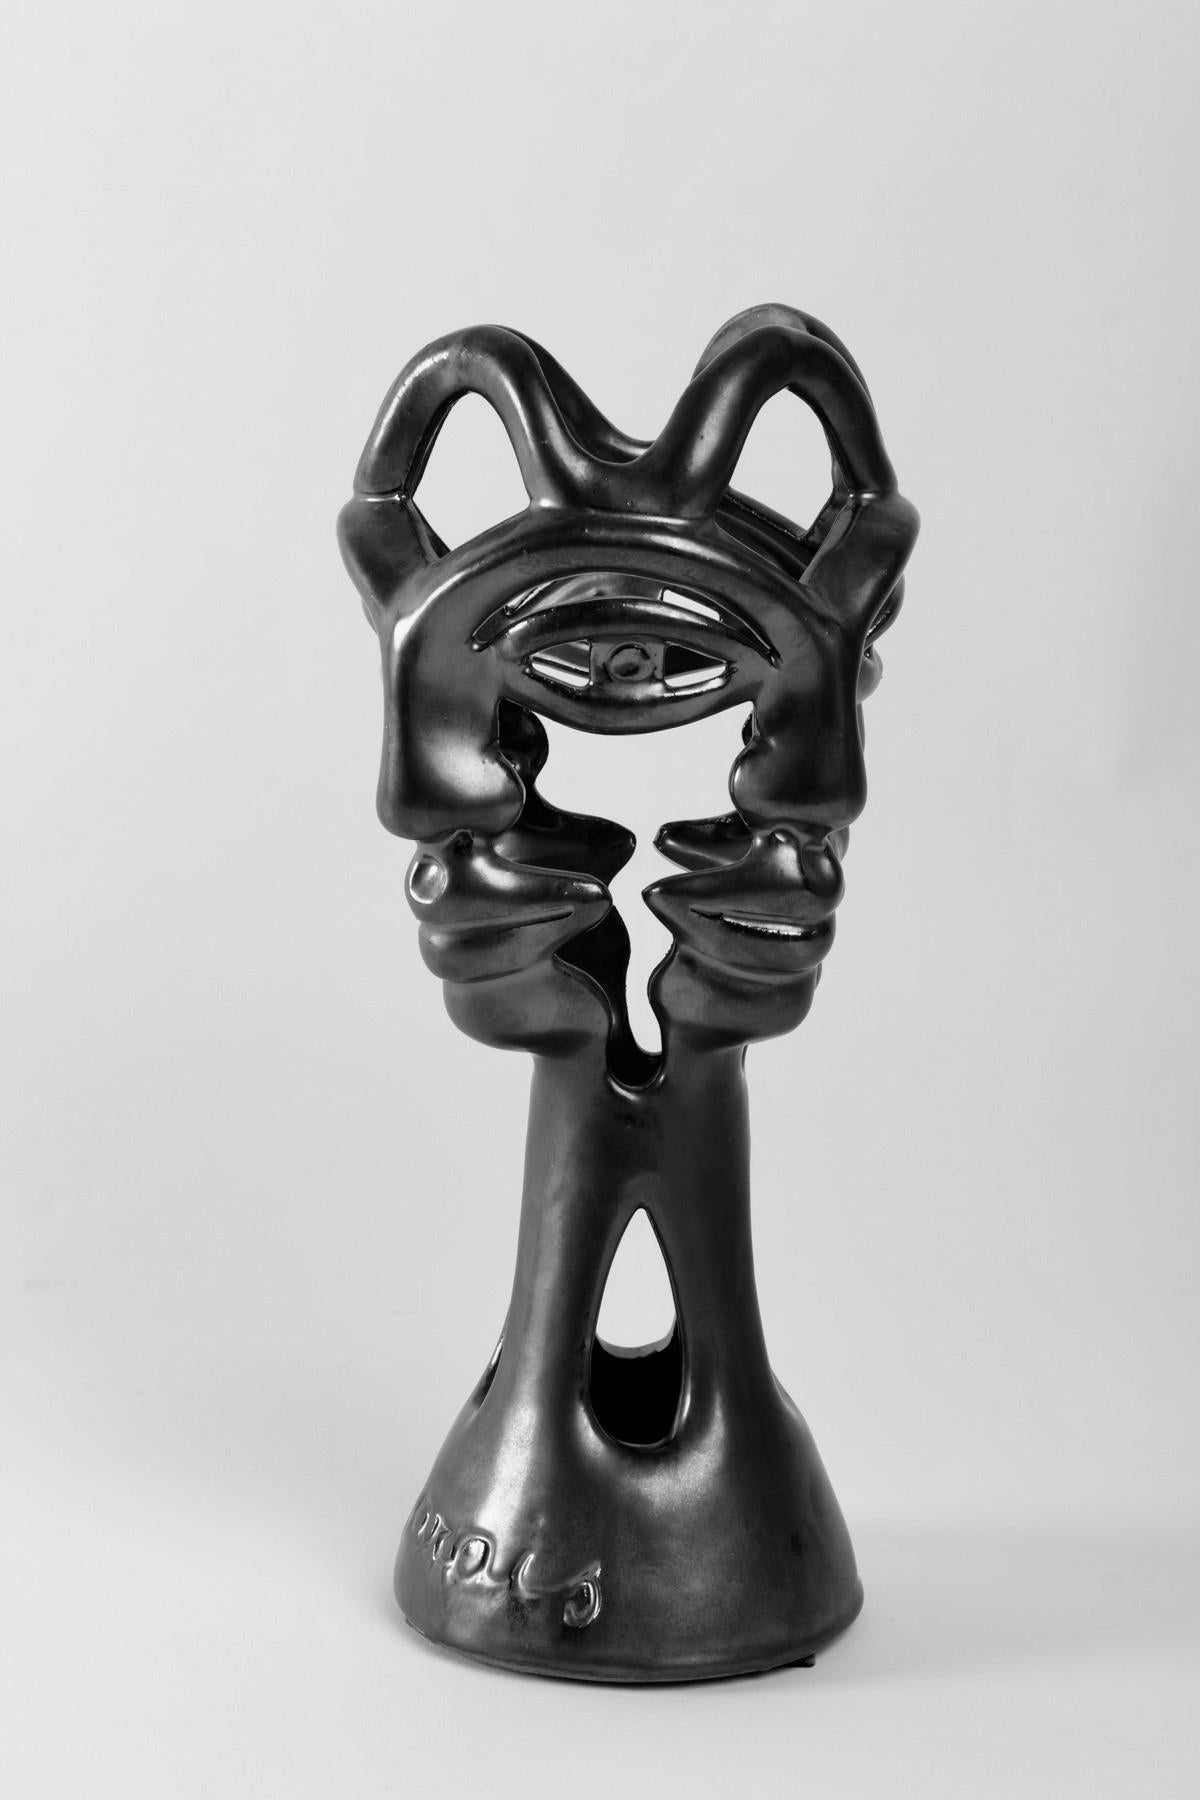 Black enameled ceramic vase designed by Jean Marais, model “4 Faces”, inspired by Jean Cocteau.
Signed Jean Marais (1913-1998) Vallauris,